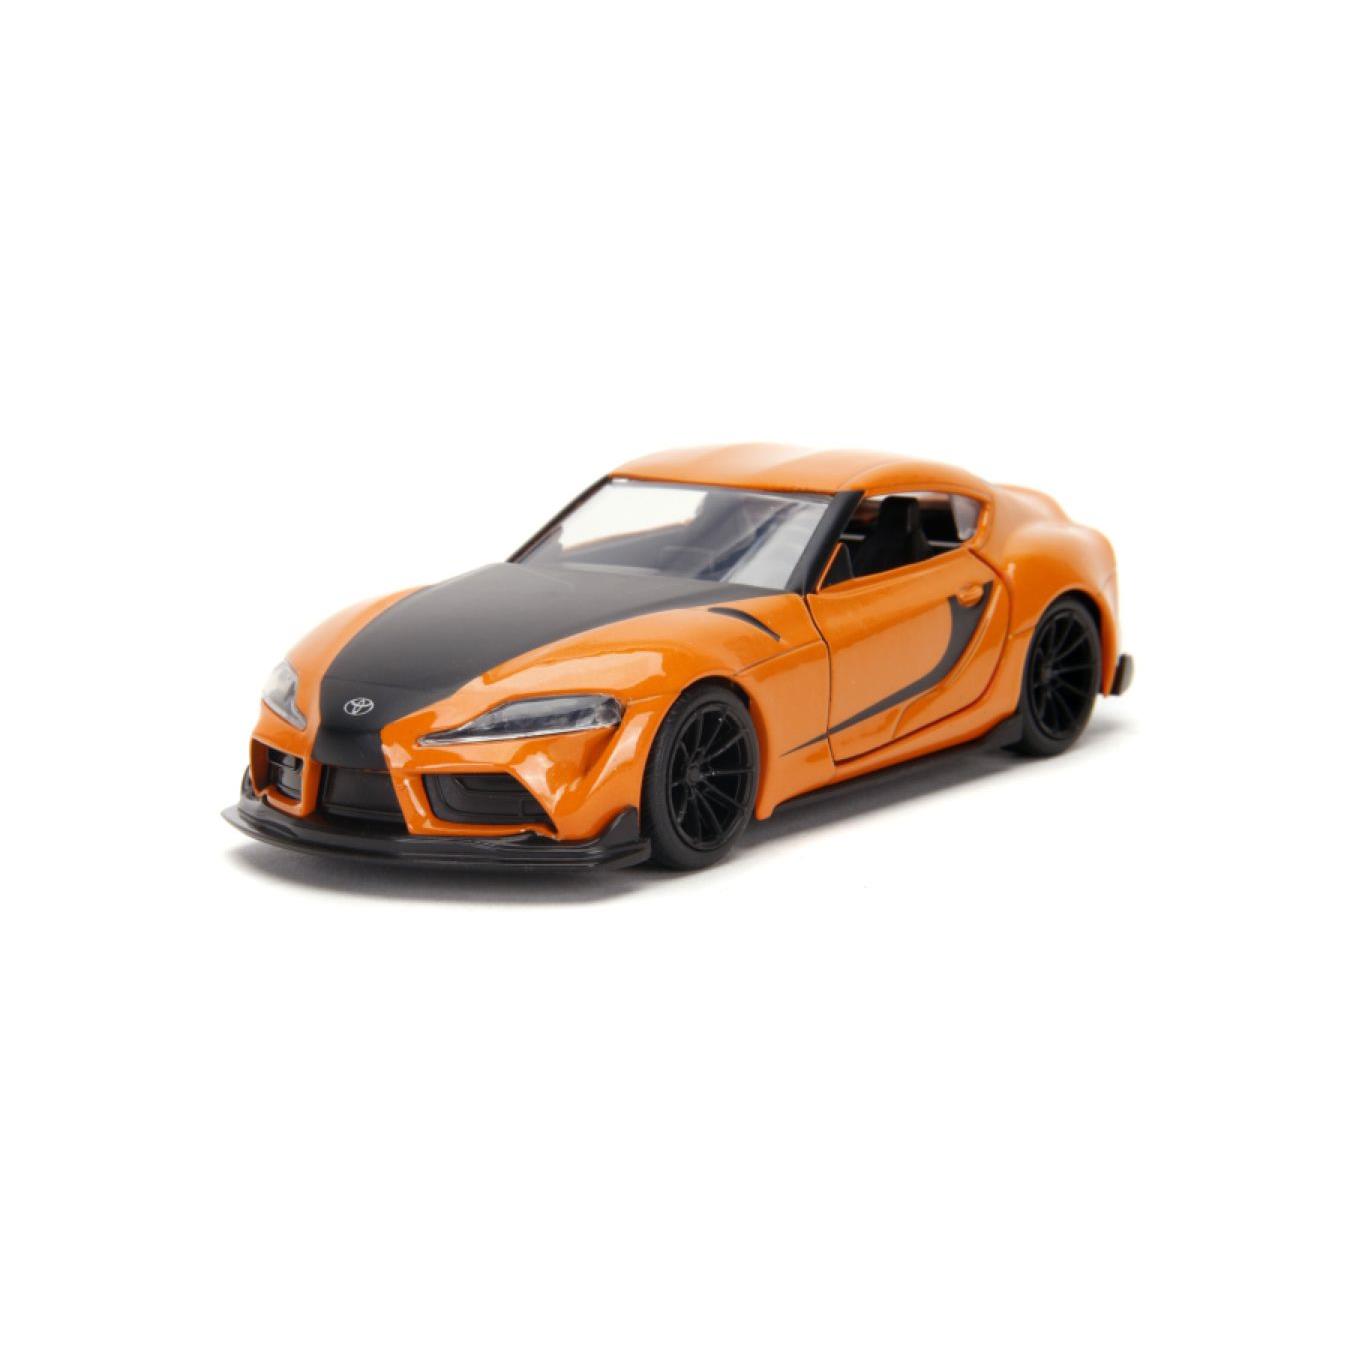 fast and furious 9 - 2020 toyota supra metallic orange 1:32 scale hollywood ride vehicle replica